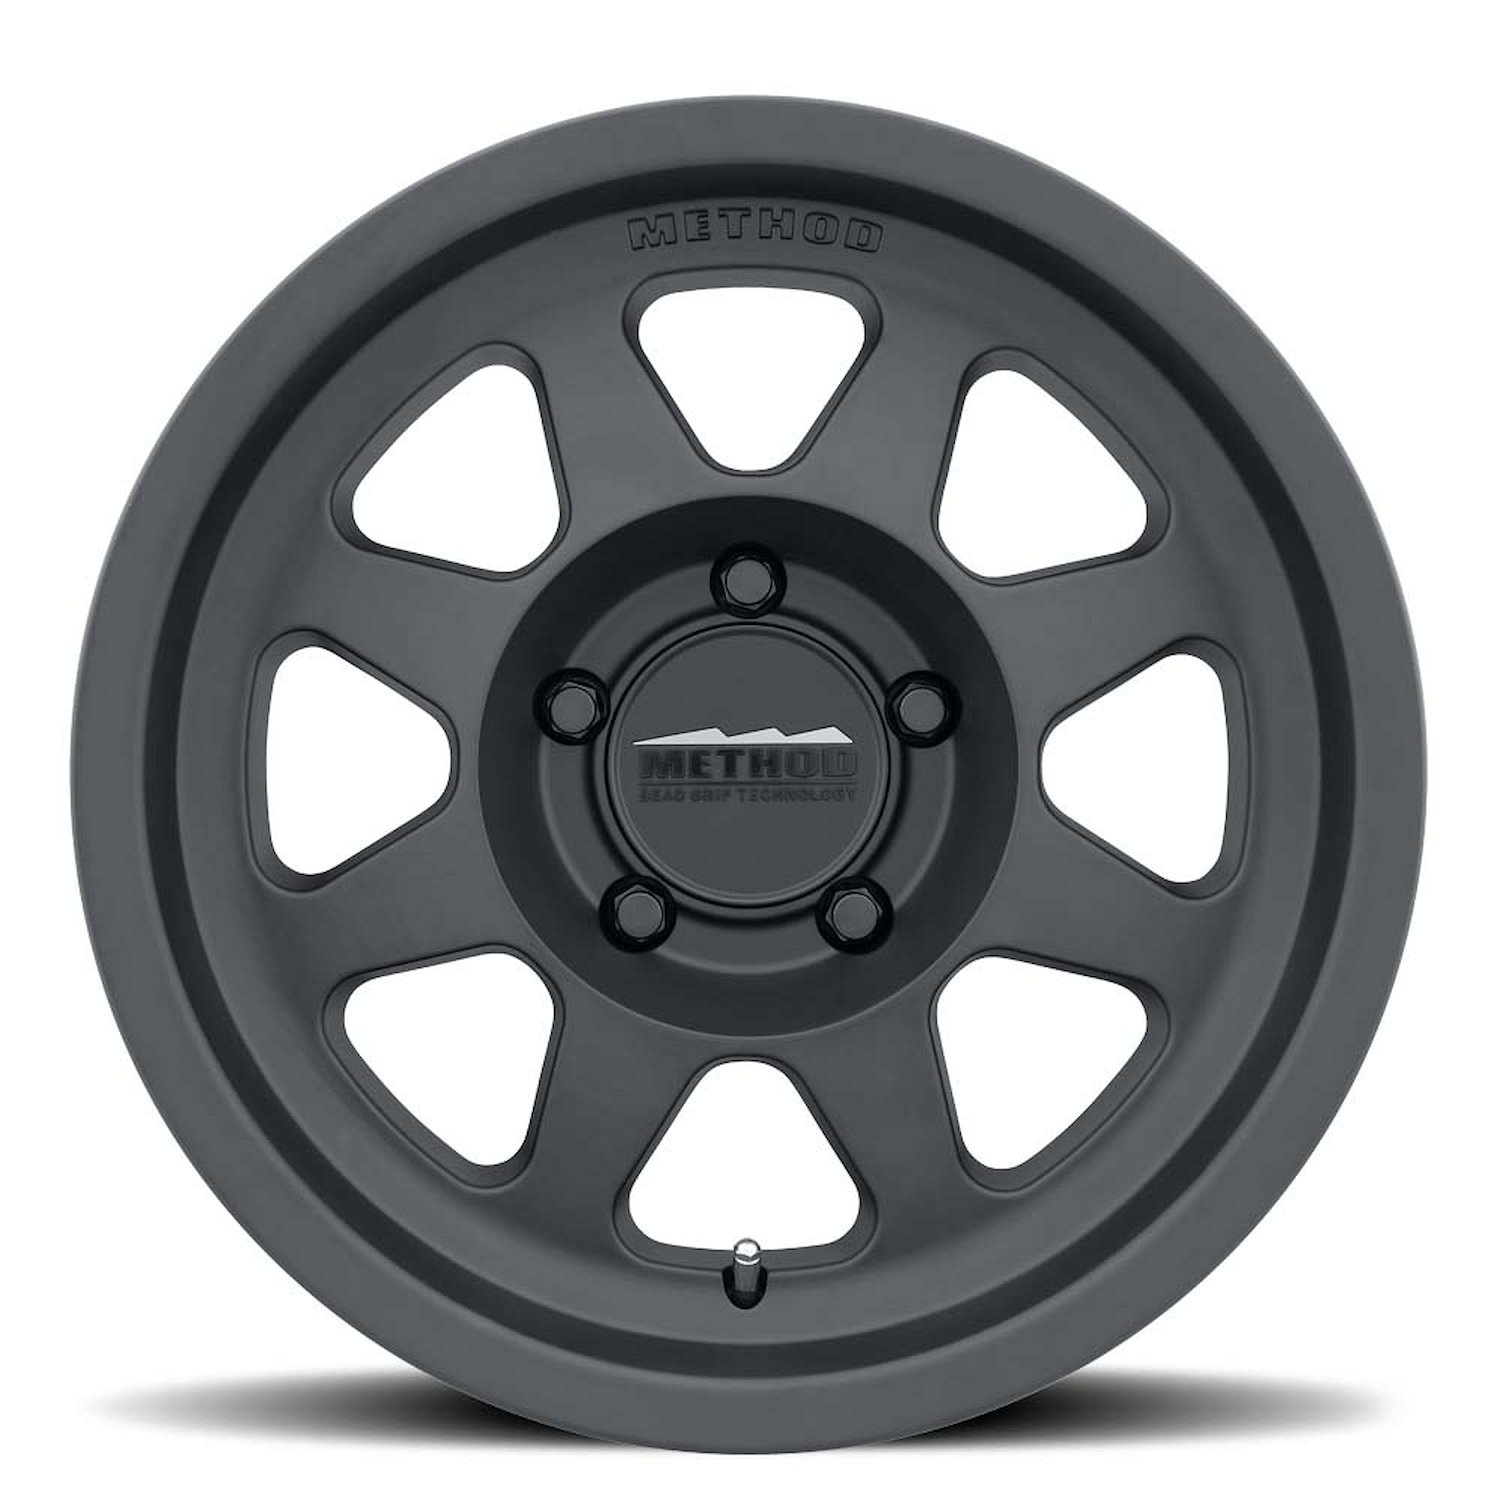 MR70157051515 TRAIL MR701 Bead Grip Wheel [Size: 15" x 7"] Matte Black